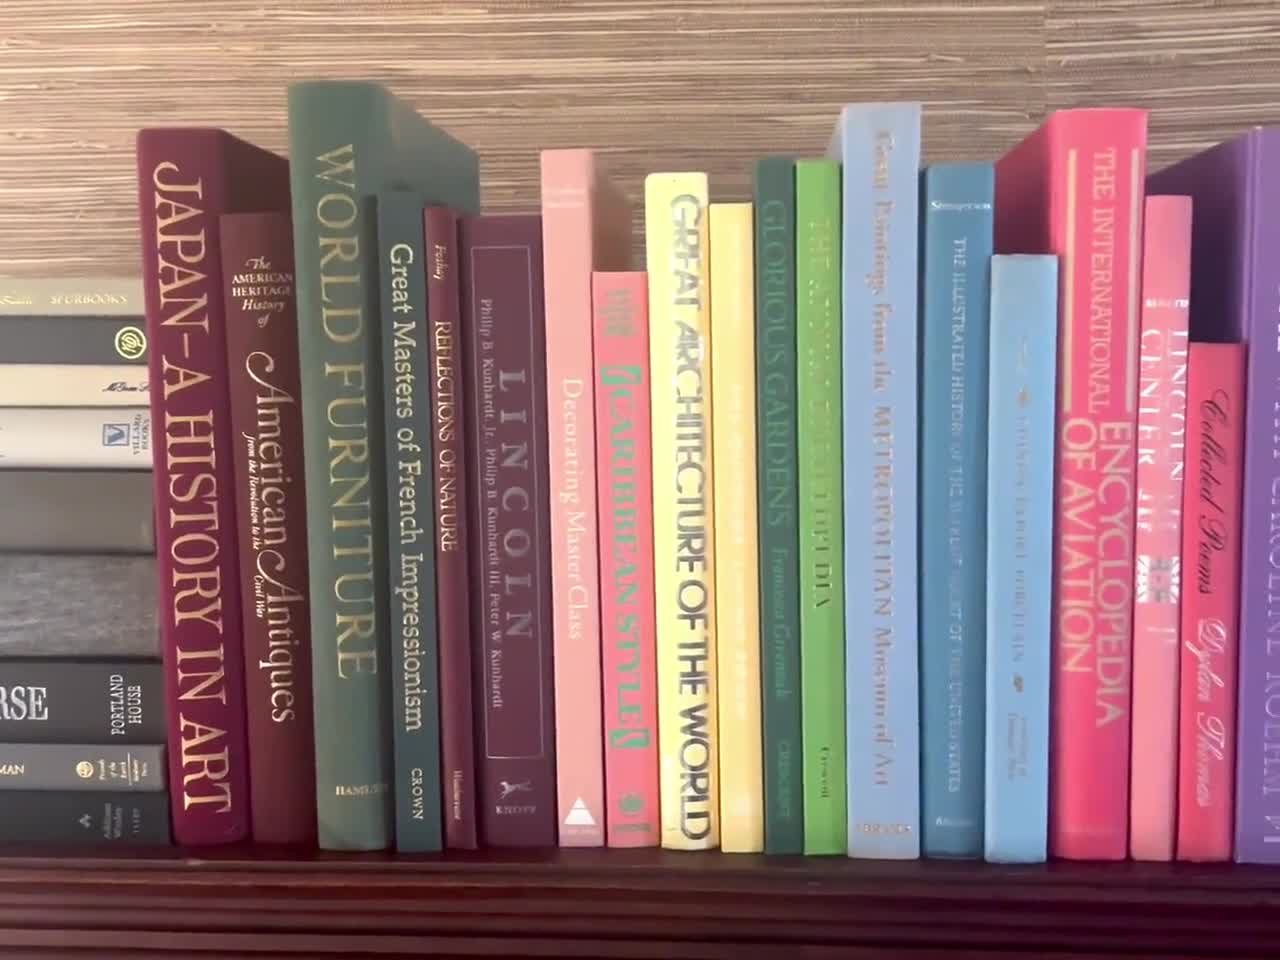 my coffee table book collection 🩷✨ #coffeetabledecor #coffeetablebook